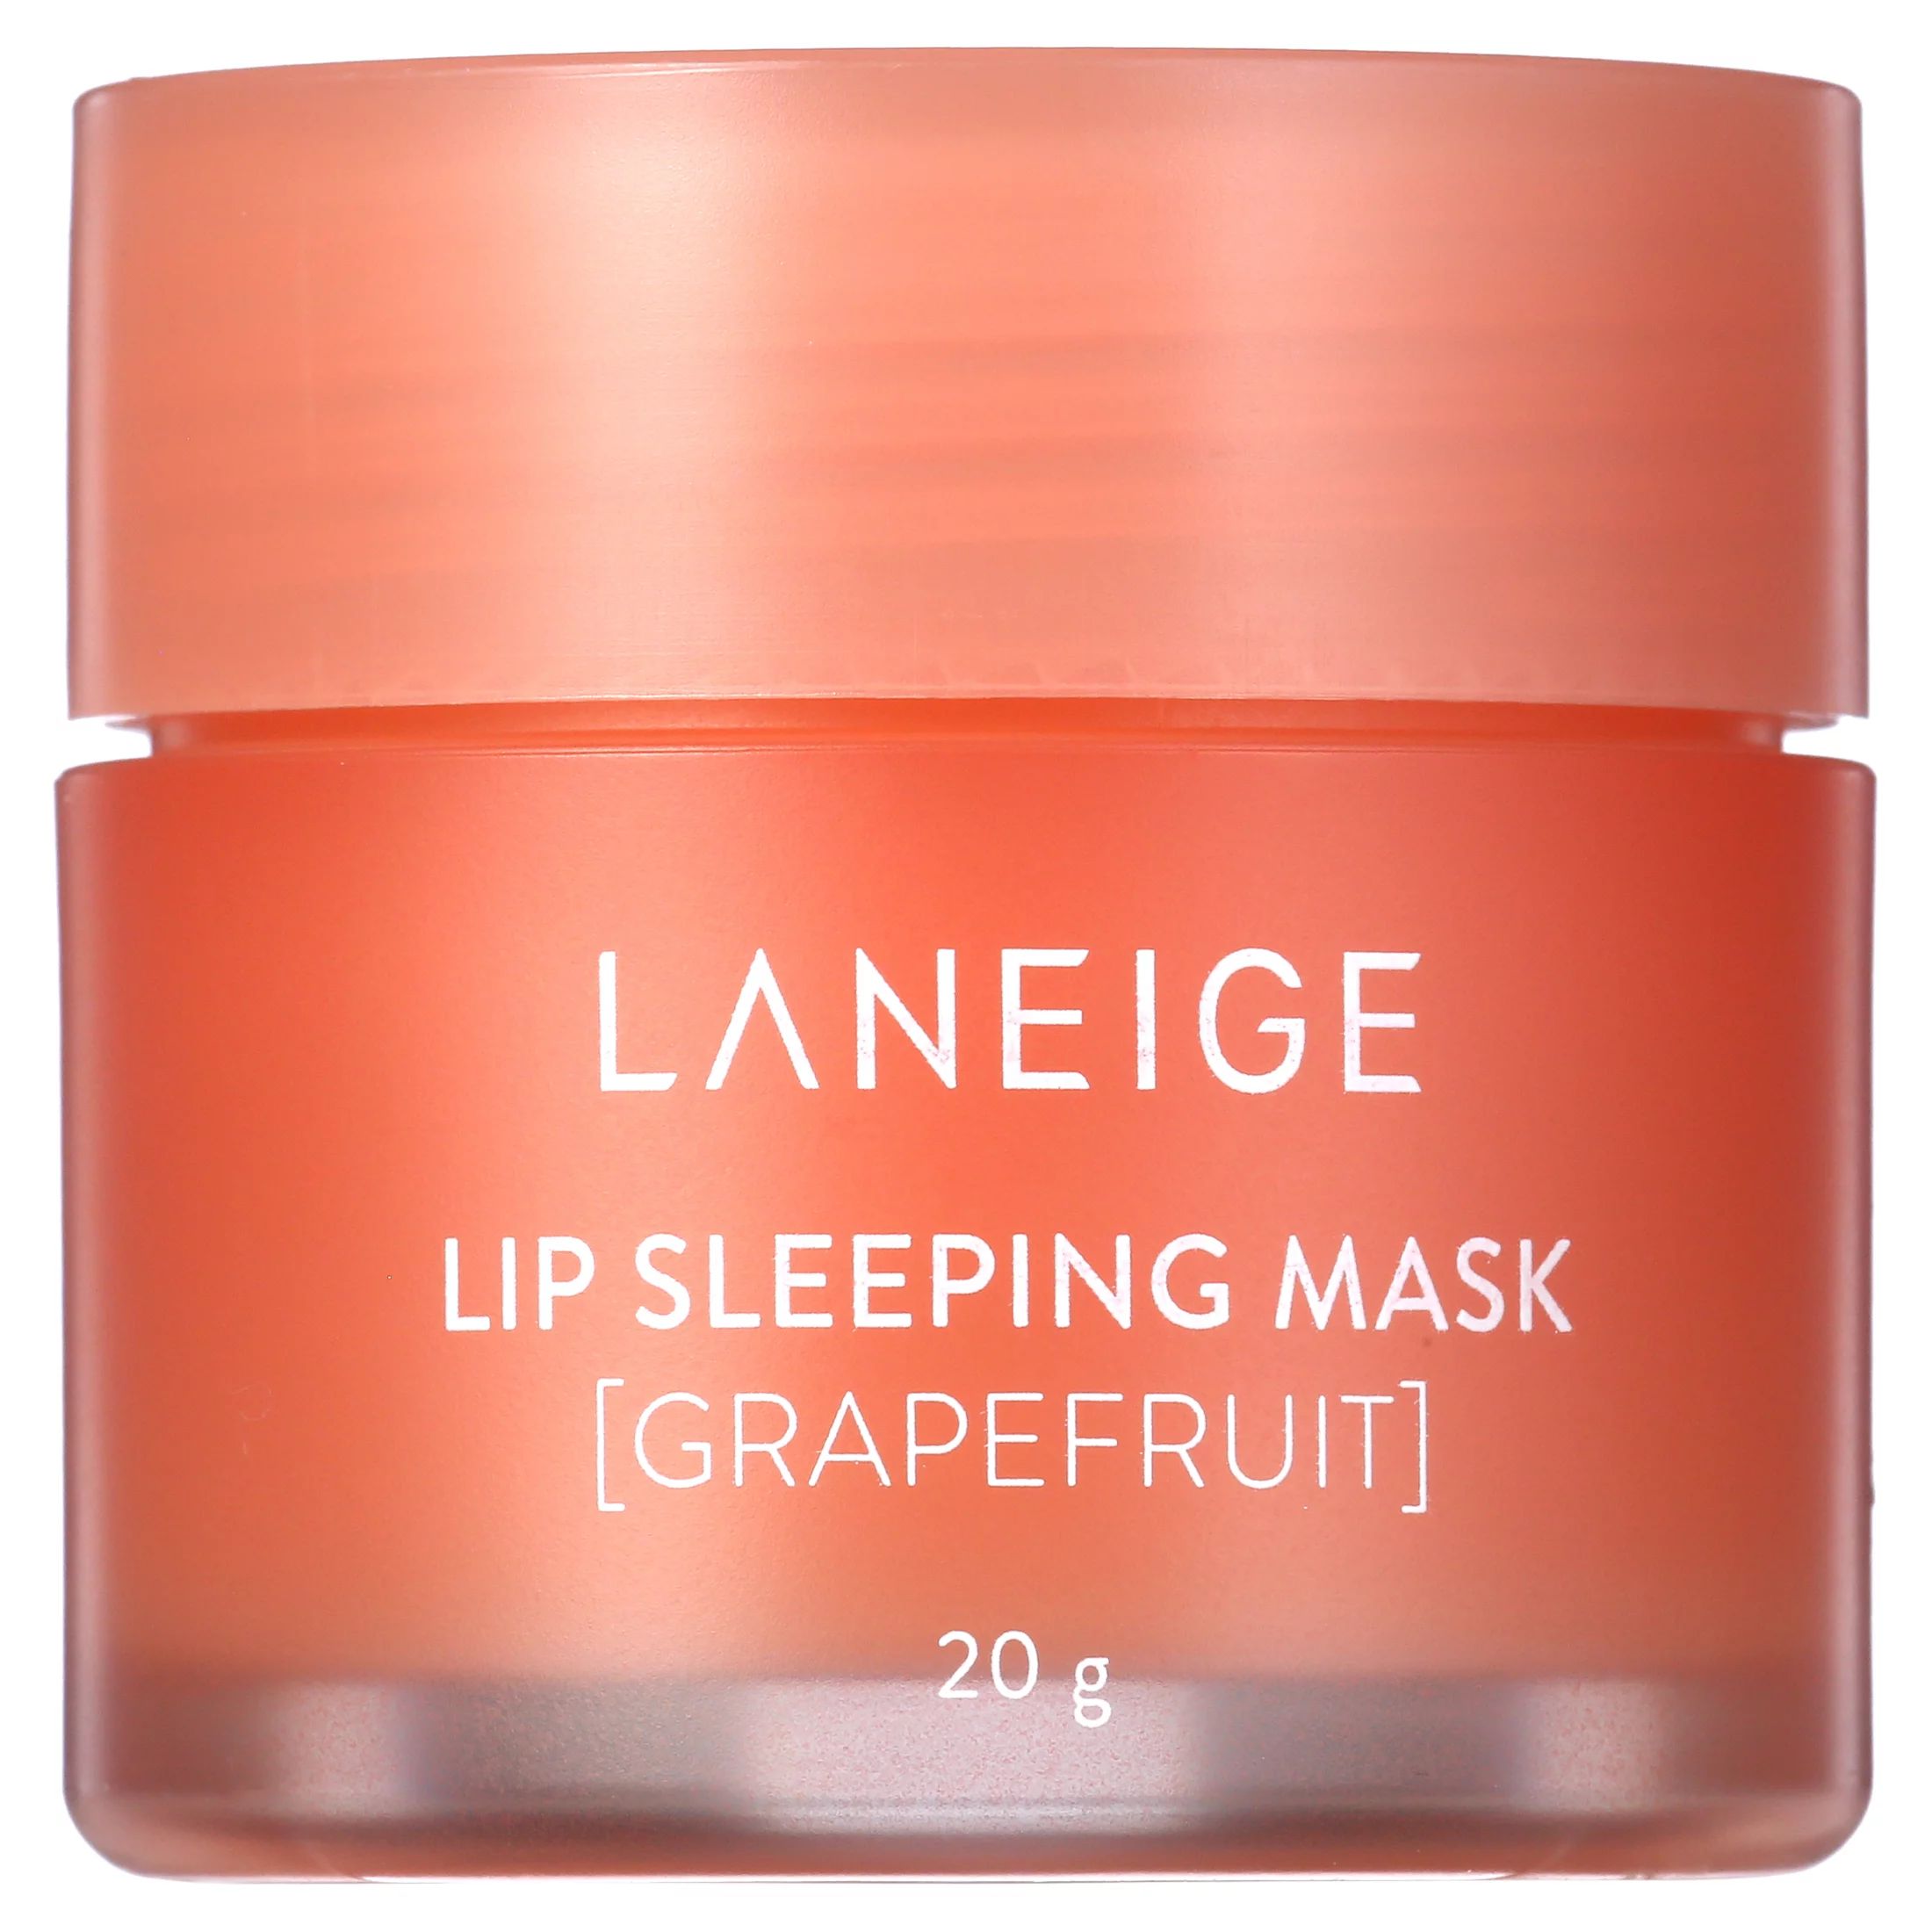 Laneige Lip Sleeping Mask Grapefruit 20g | Walmart (US)